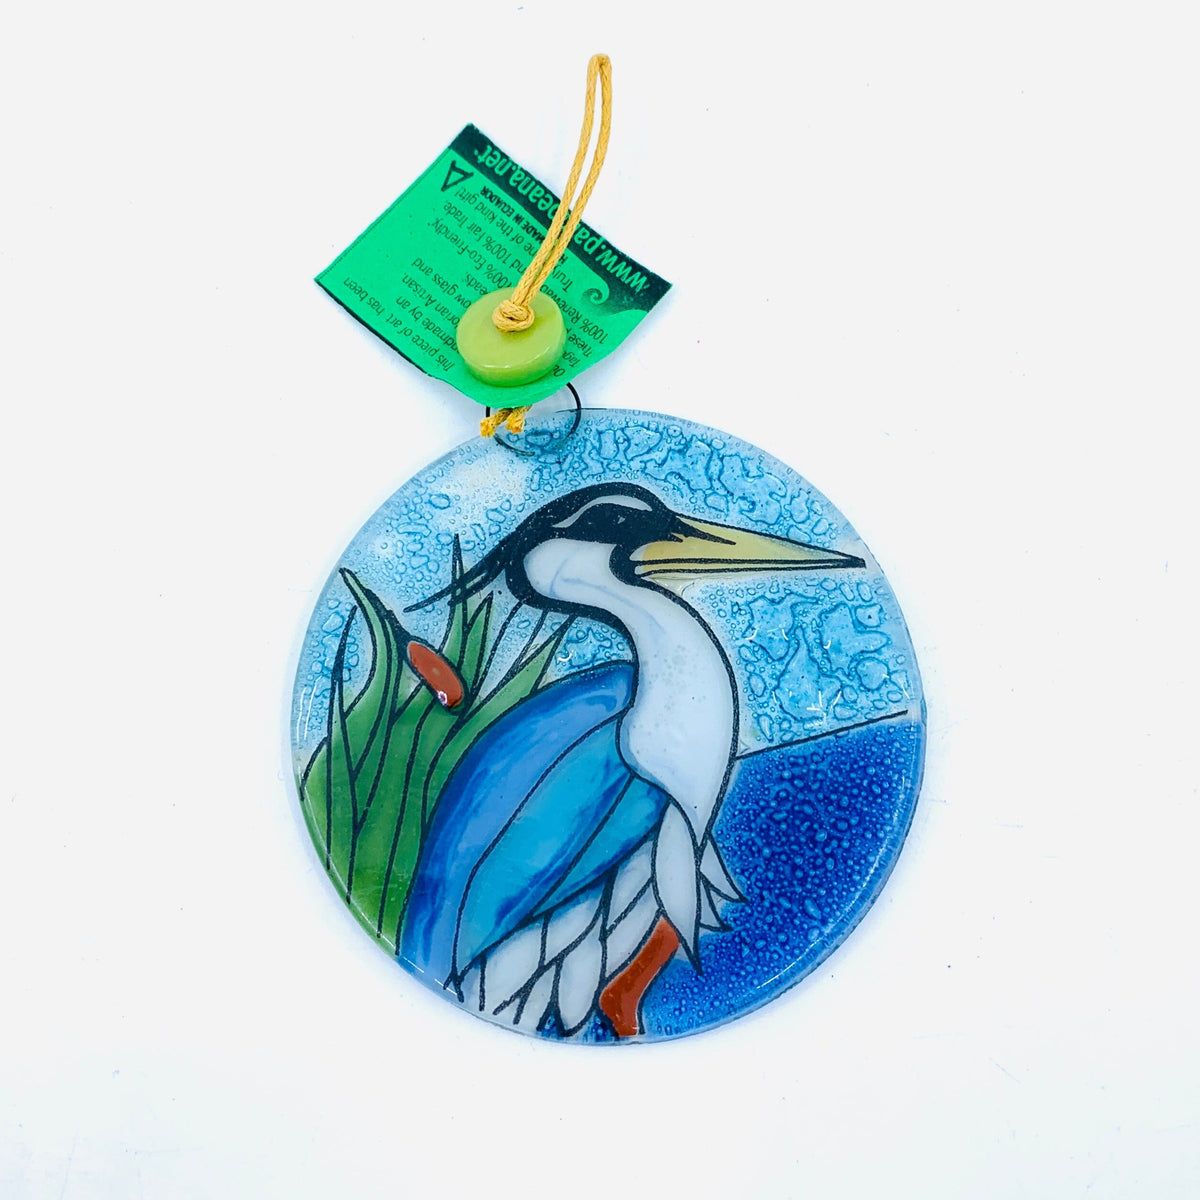 Fair Trade Ornament 171 Blue Heron Ornament Pam Peana 